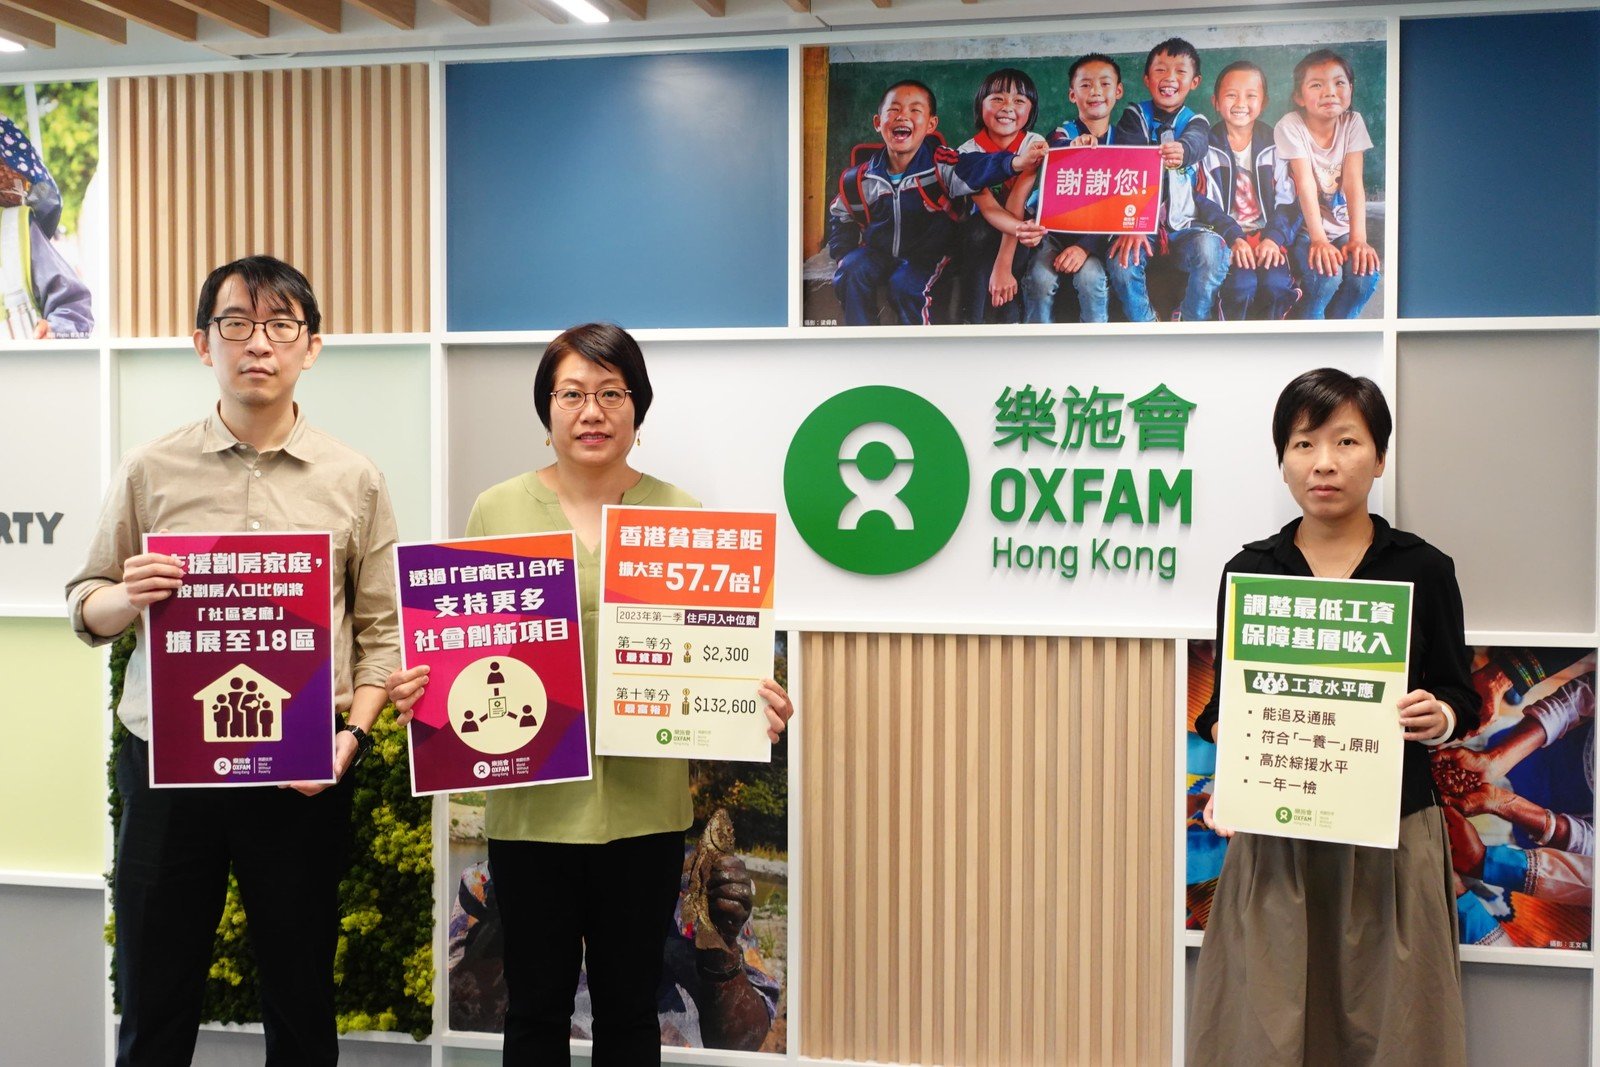 From the left:  • Terry Leung Ming-fung, Assistant Research and Advocacy Manager, Oxfam Hong Kong • Kalina Tsang Ka-wai, Director General, Oxfam Hong Kong • Wong Shek-Hung, Director of Hong Kong, Macau, Taiwan Programme, Oxfam Hong Kong